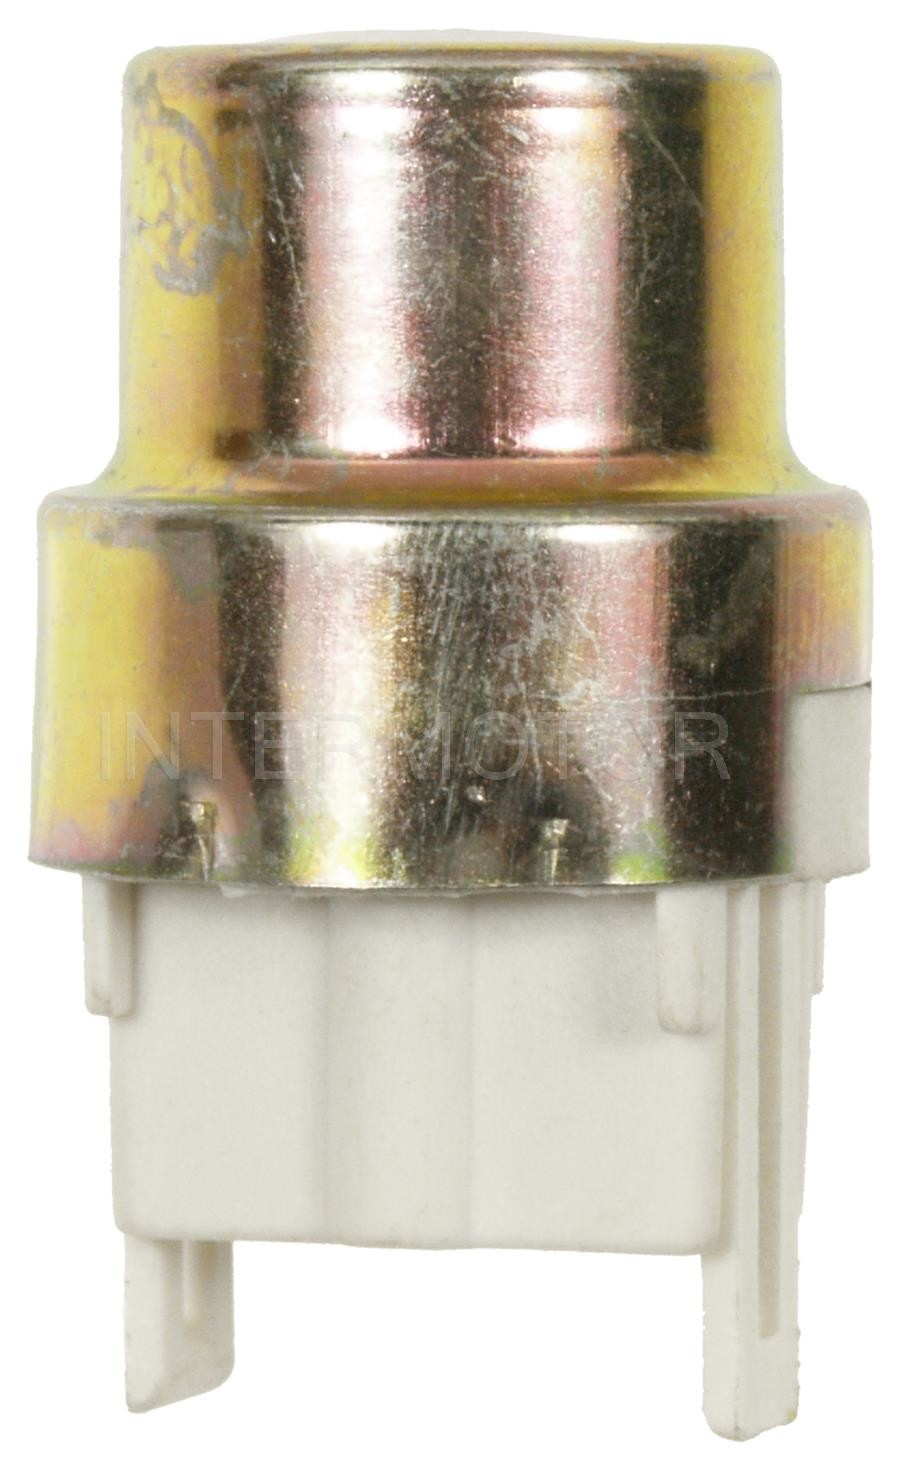 STANDARD INTERMOTOR WIRE - Diesel Glow Plug Relay - STI RY-51